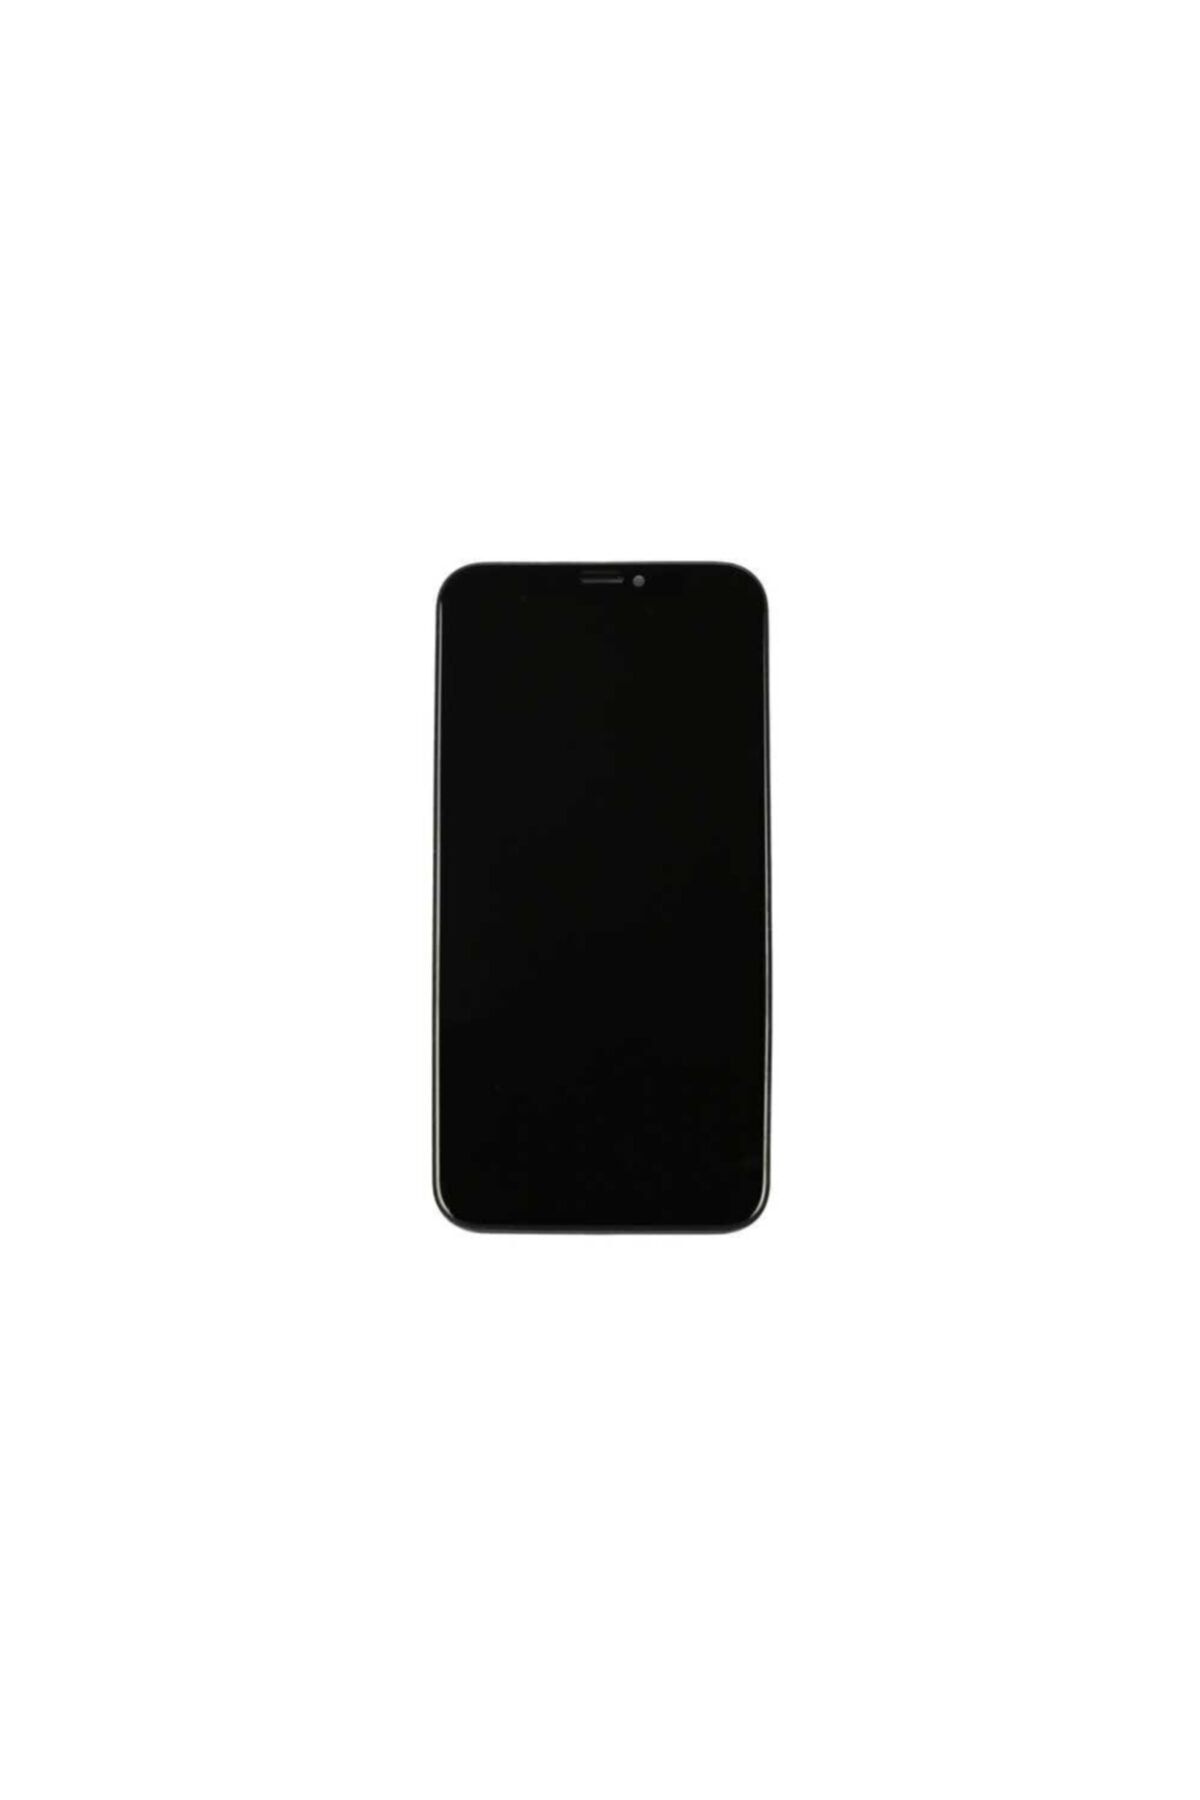 Parça Bankası Apple Iphone X Lcd Ekran Dokunmatik Siyah Tft Aaa Kalite